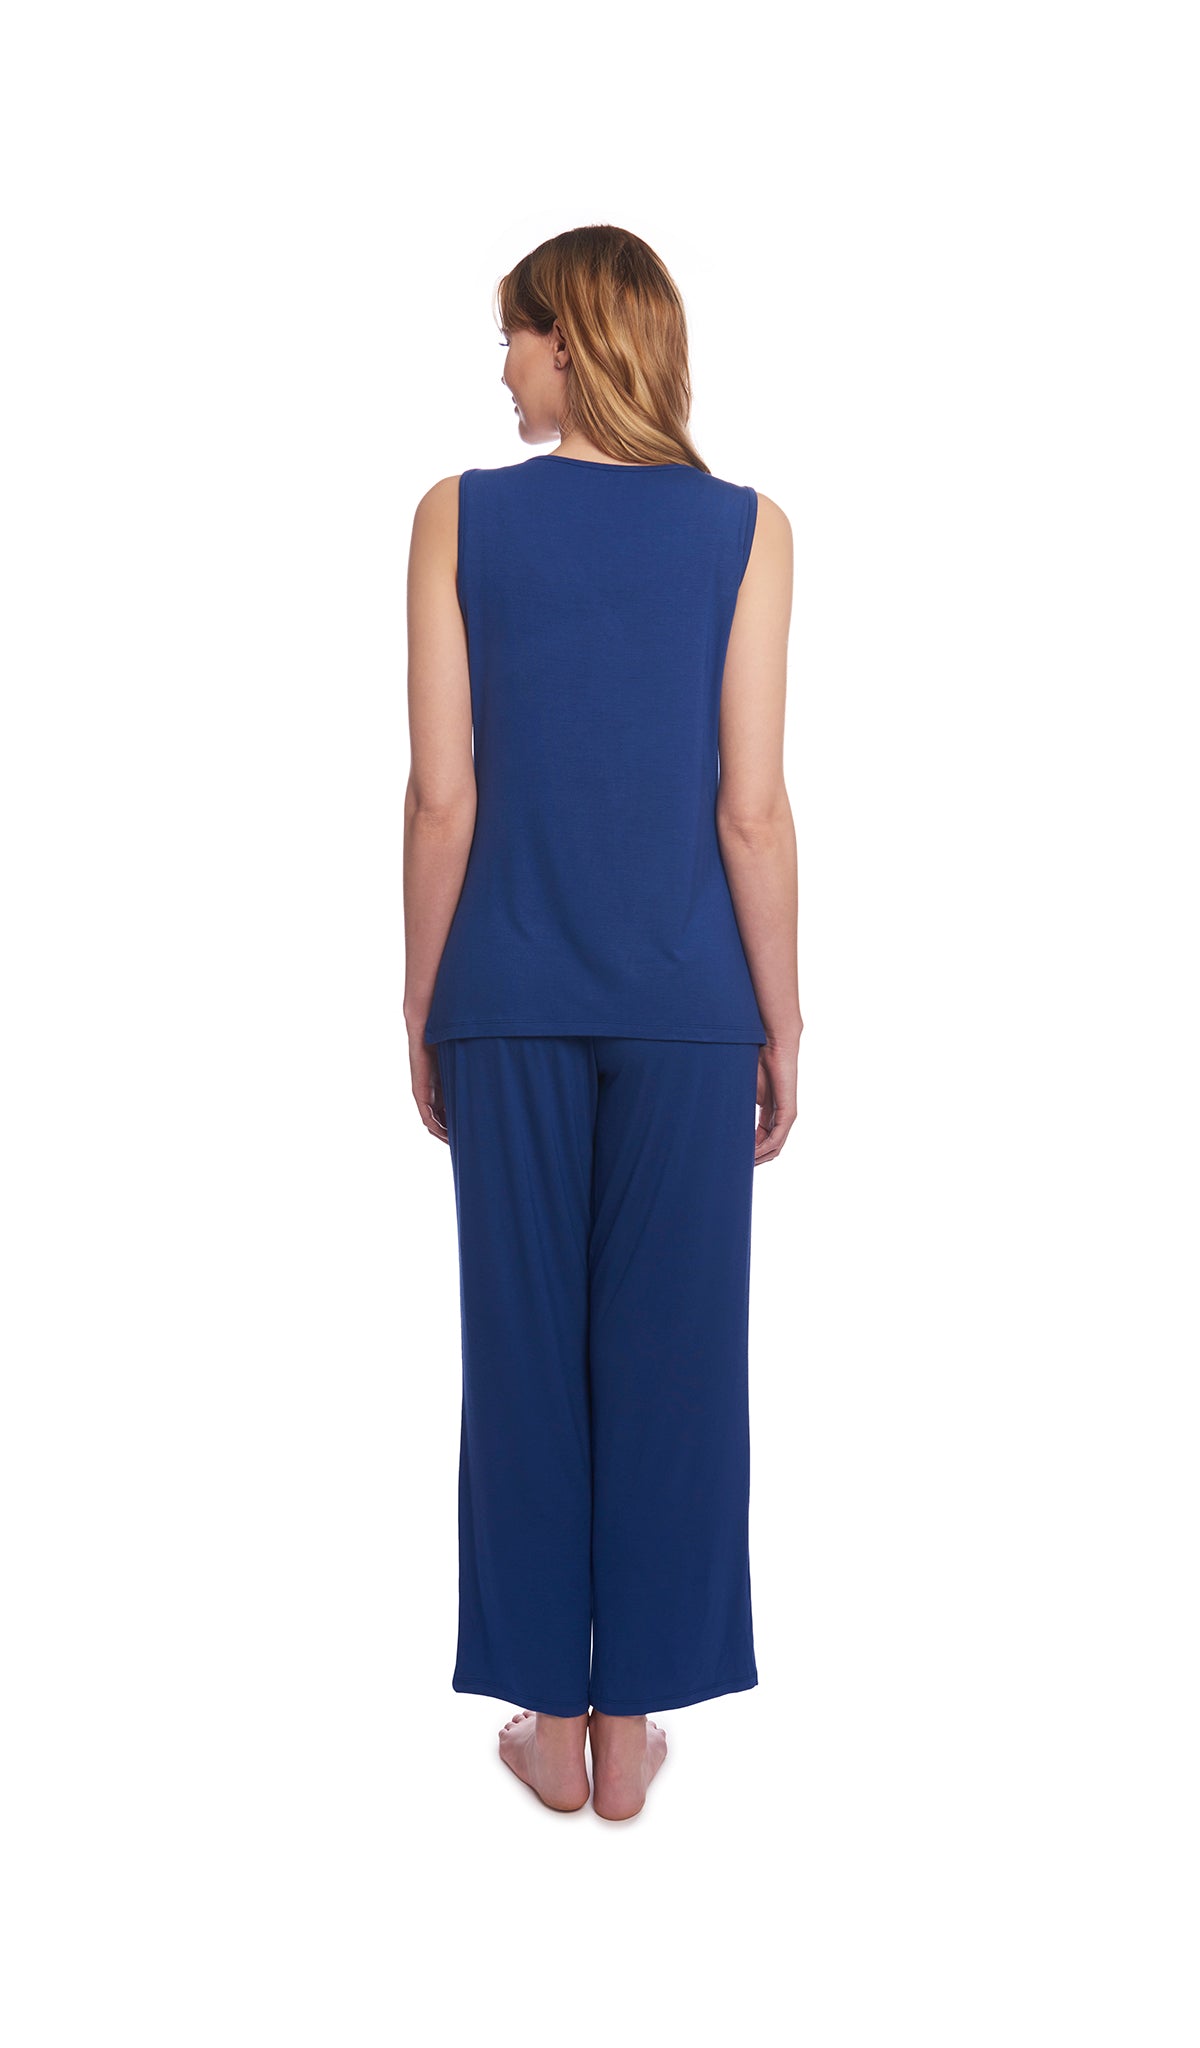 Denim Blue Analise 5-Piece Set, back shot of woman wearing tank top and pant.